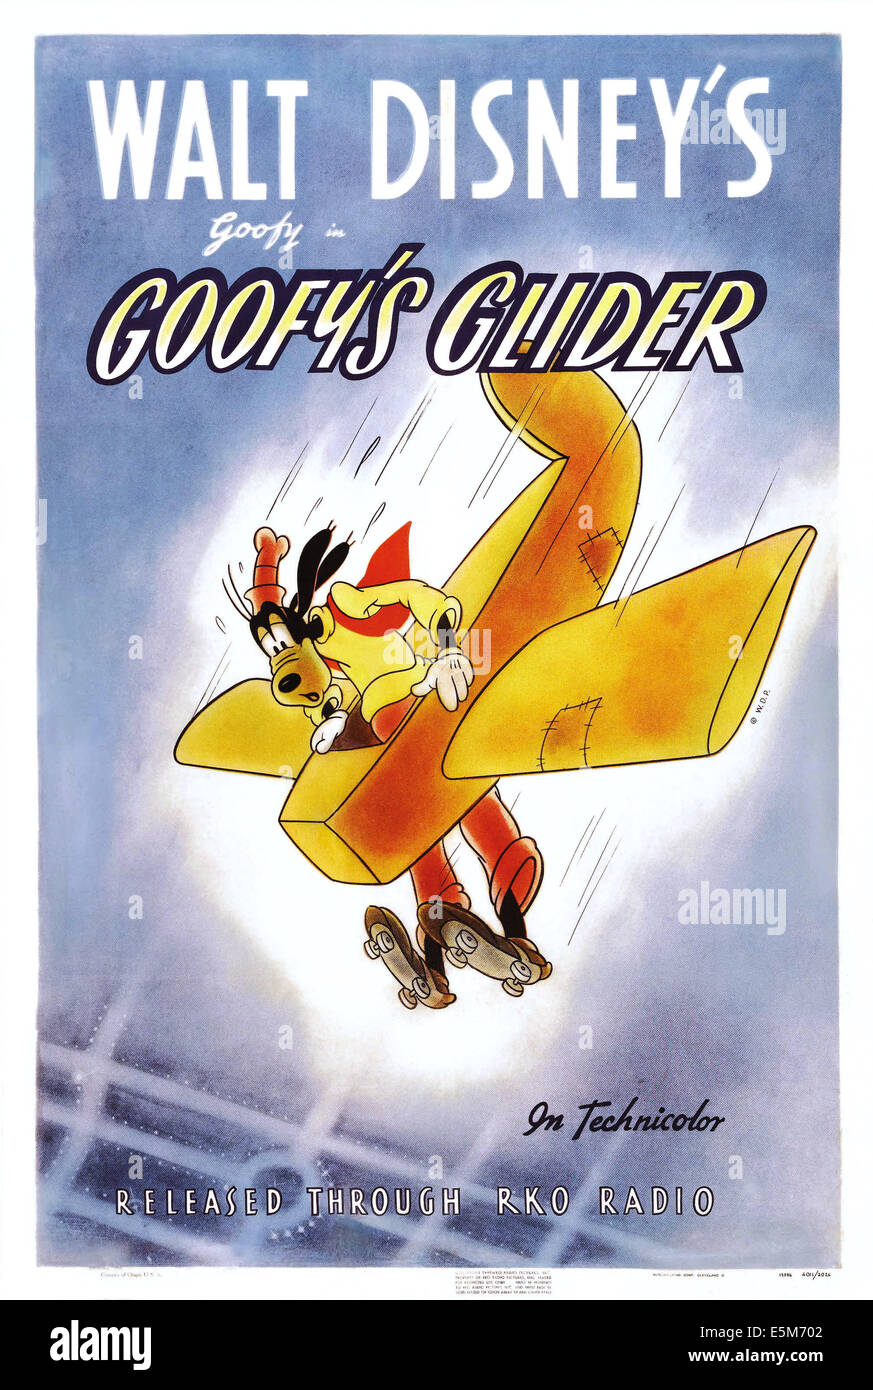 GOOFY'S GLIDER, poster art for Walt Disney animated short, Goofy, 1940 Stock Photo